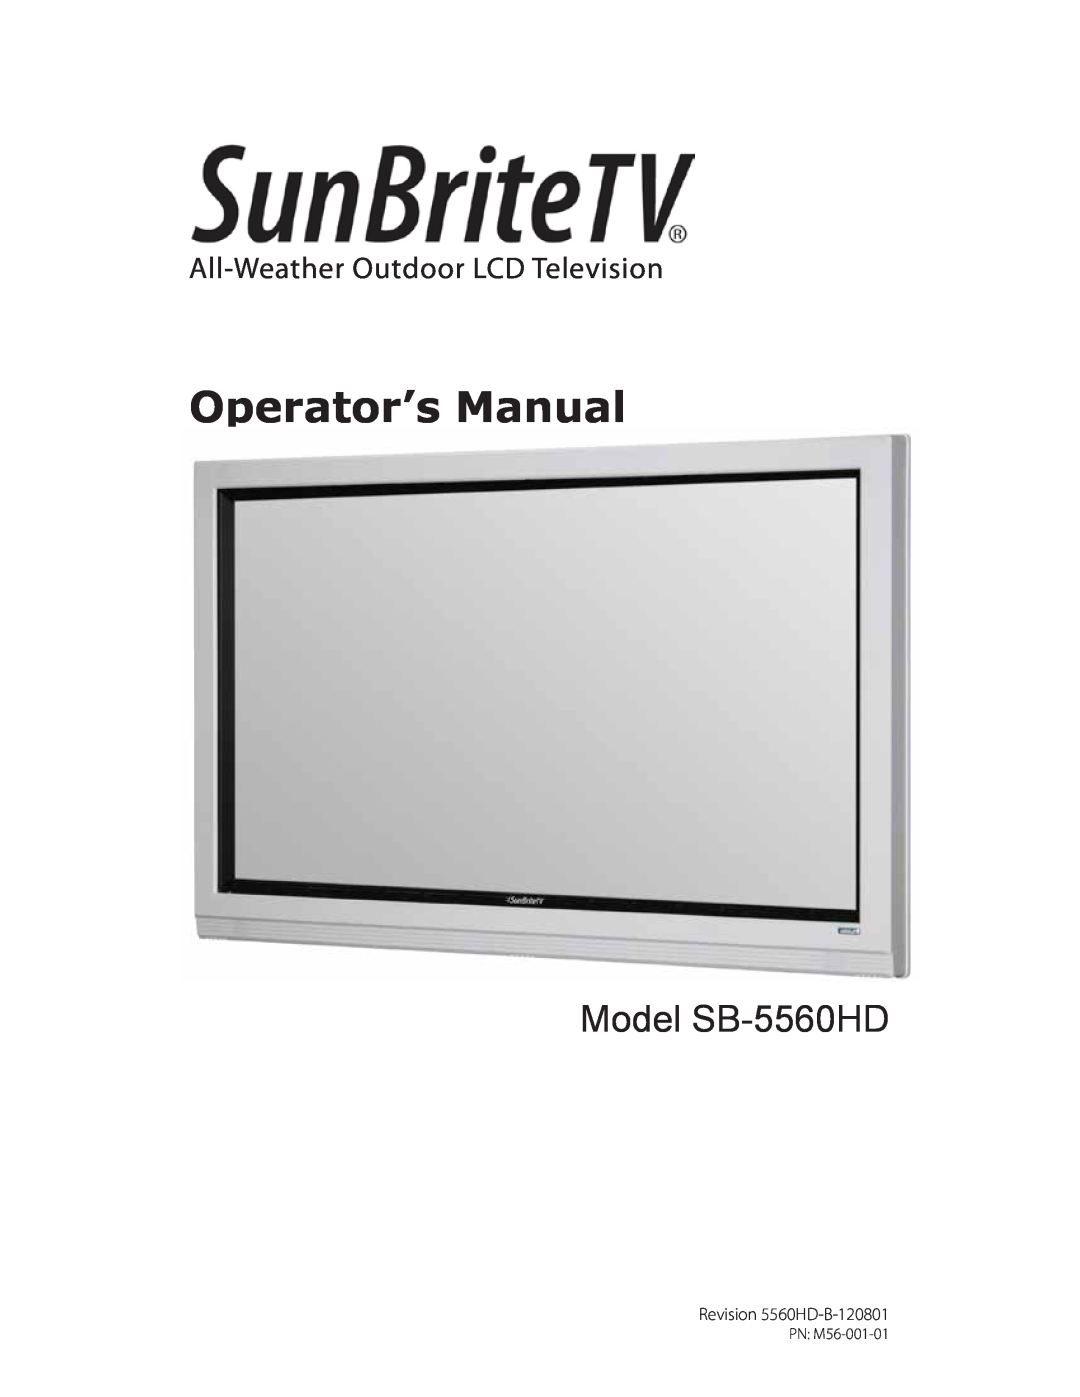 SunBriteTV SB5560HDBL, SB5560HDSL manual Operator’s Manual, Model SB-5560HD, All-Weather Outdoor LCD Television 